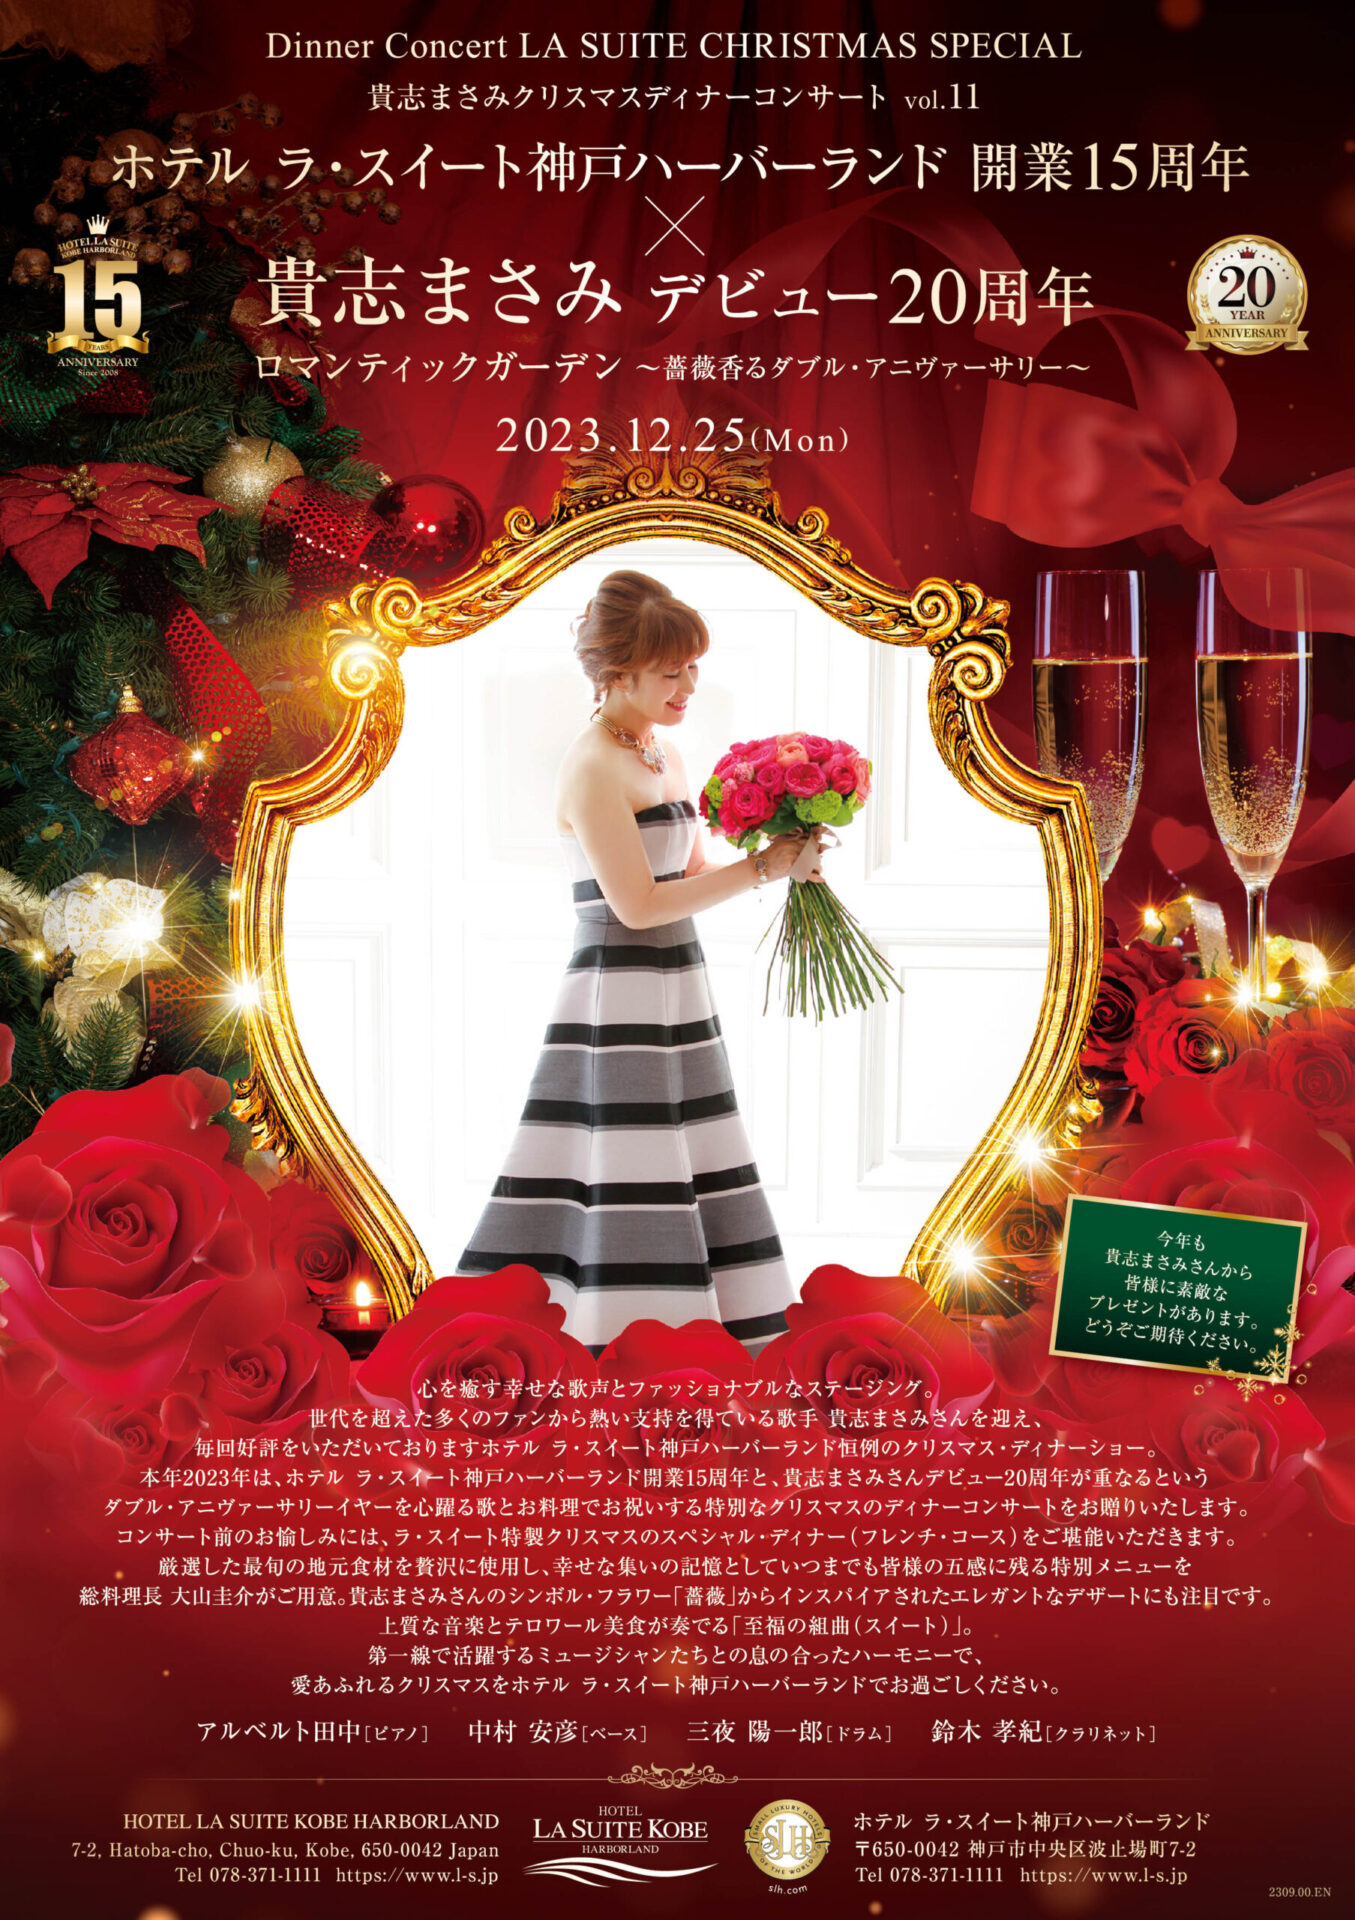 Featured image for “クリスマスディナーコンサート vol.11 ロマンティックガーデン〜薔薇香るダブル・アニヴァーサリー〜”